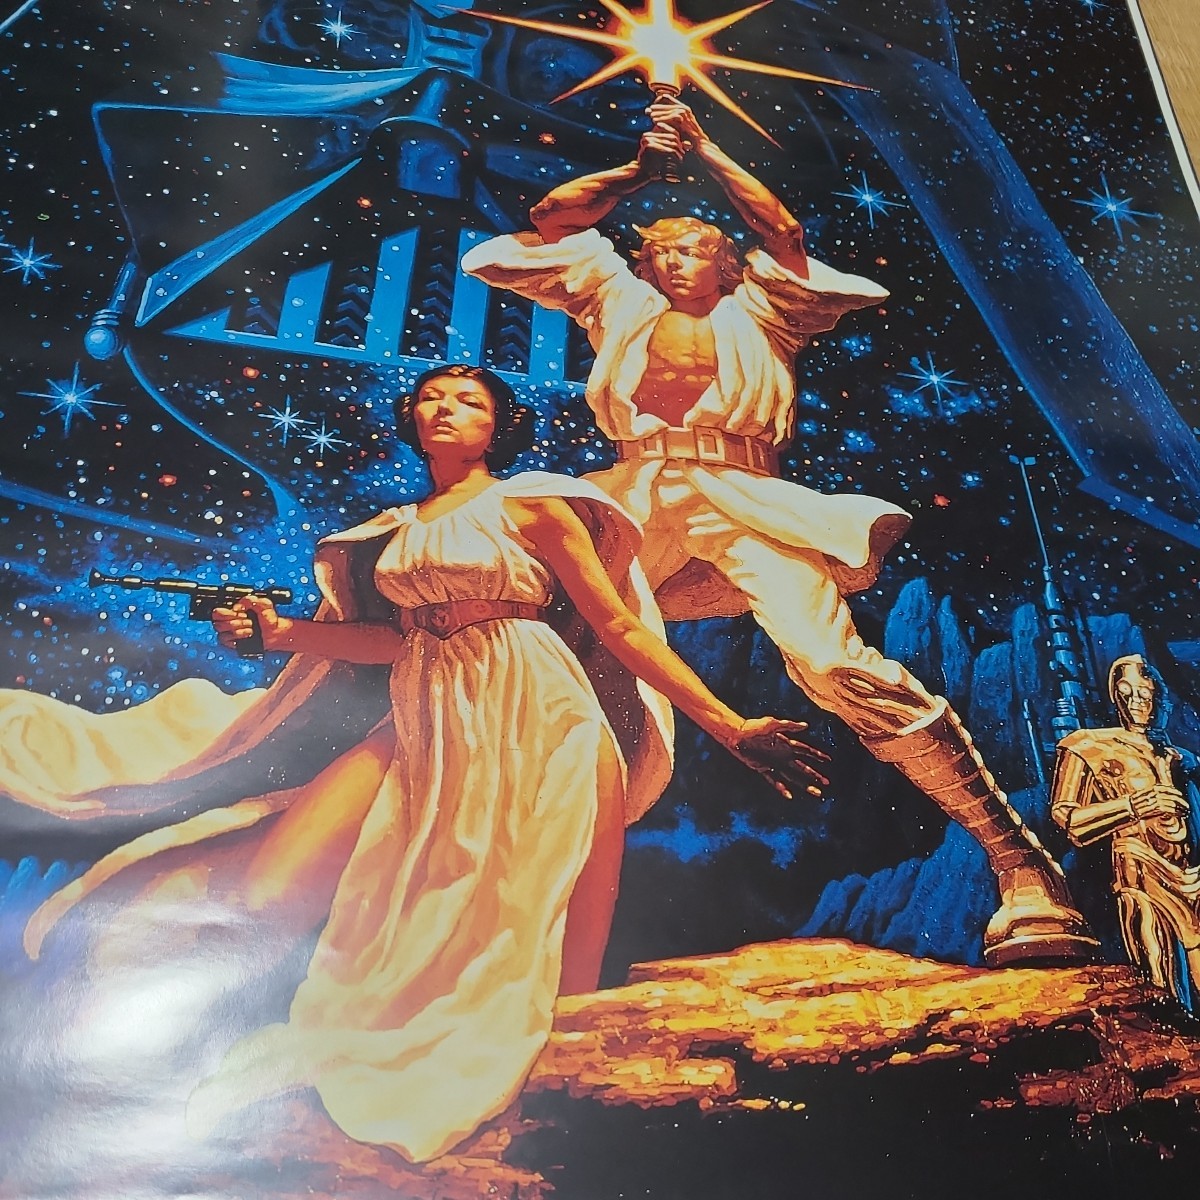  Star Wars poster English version Star wars